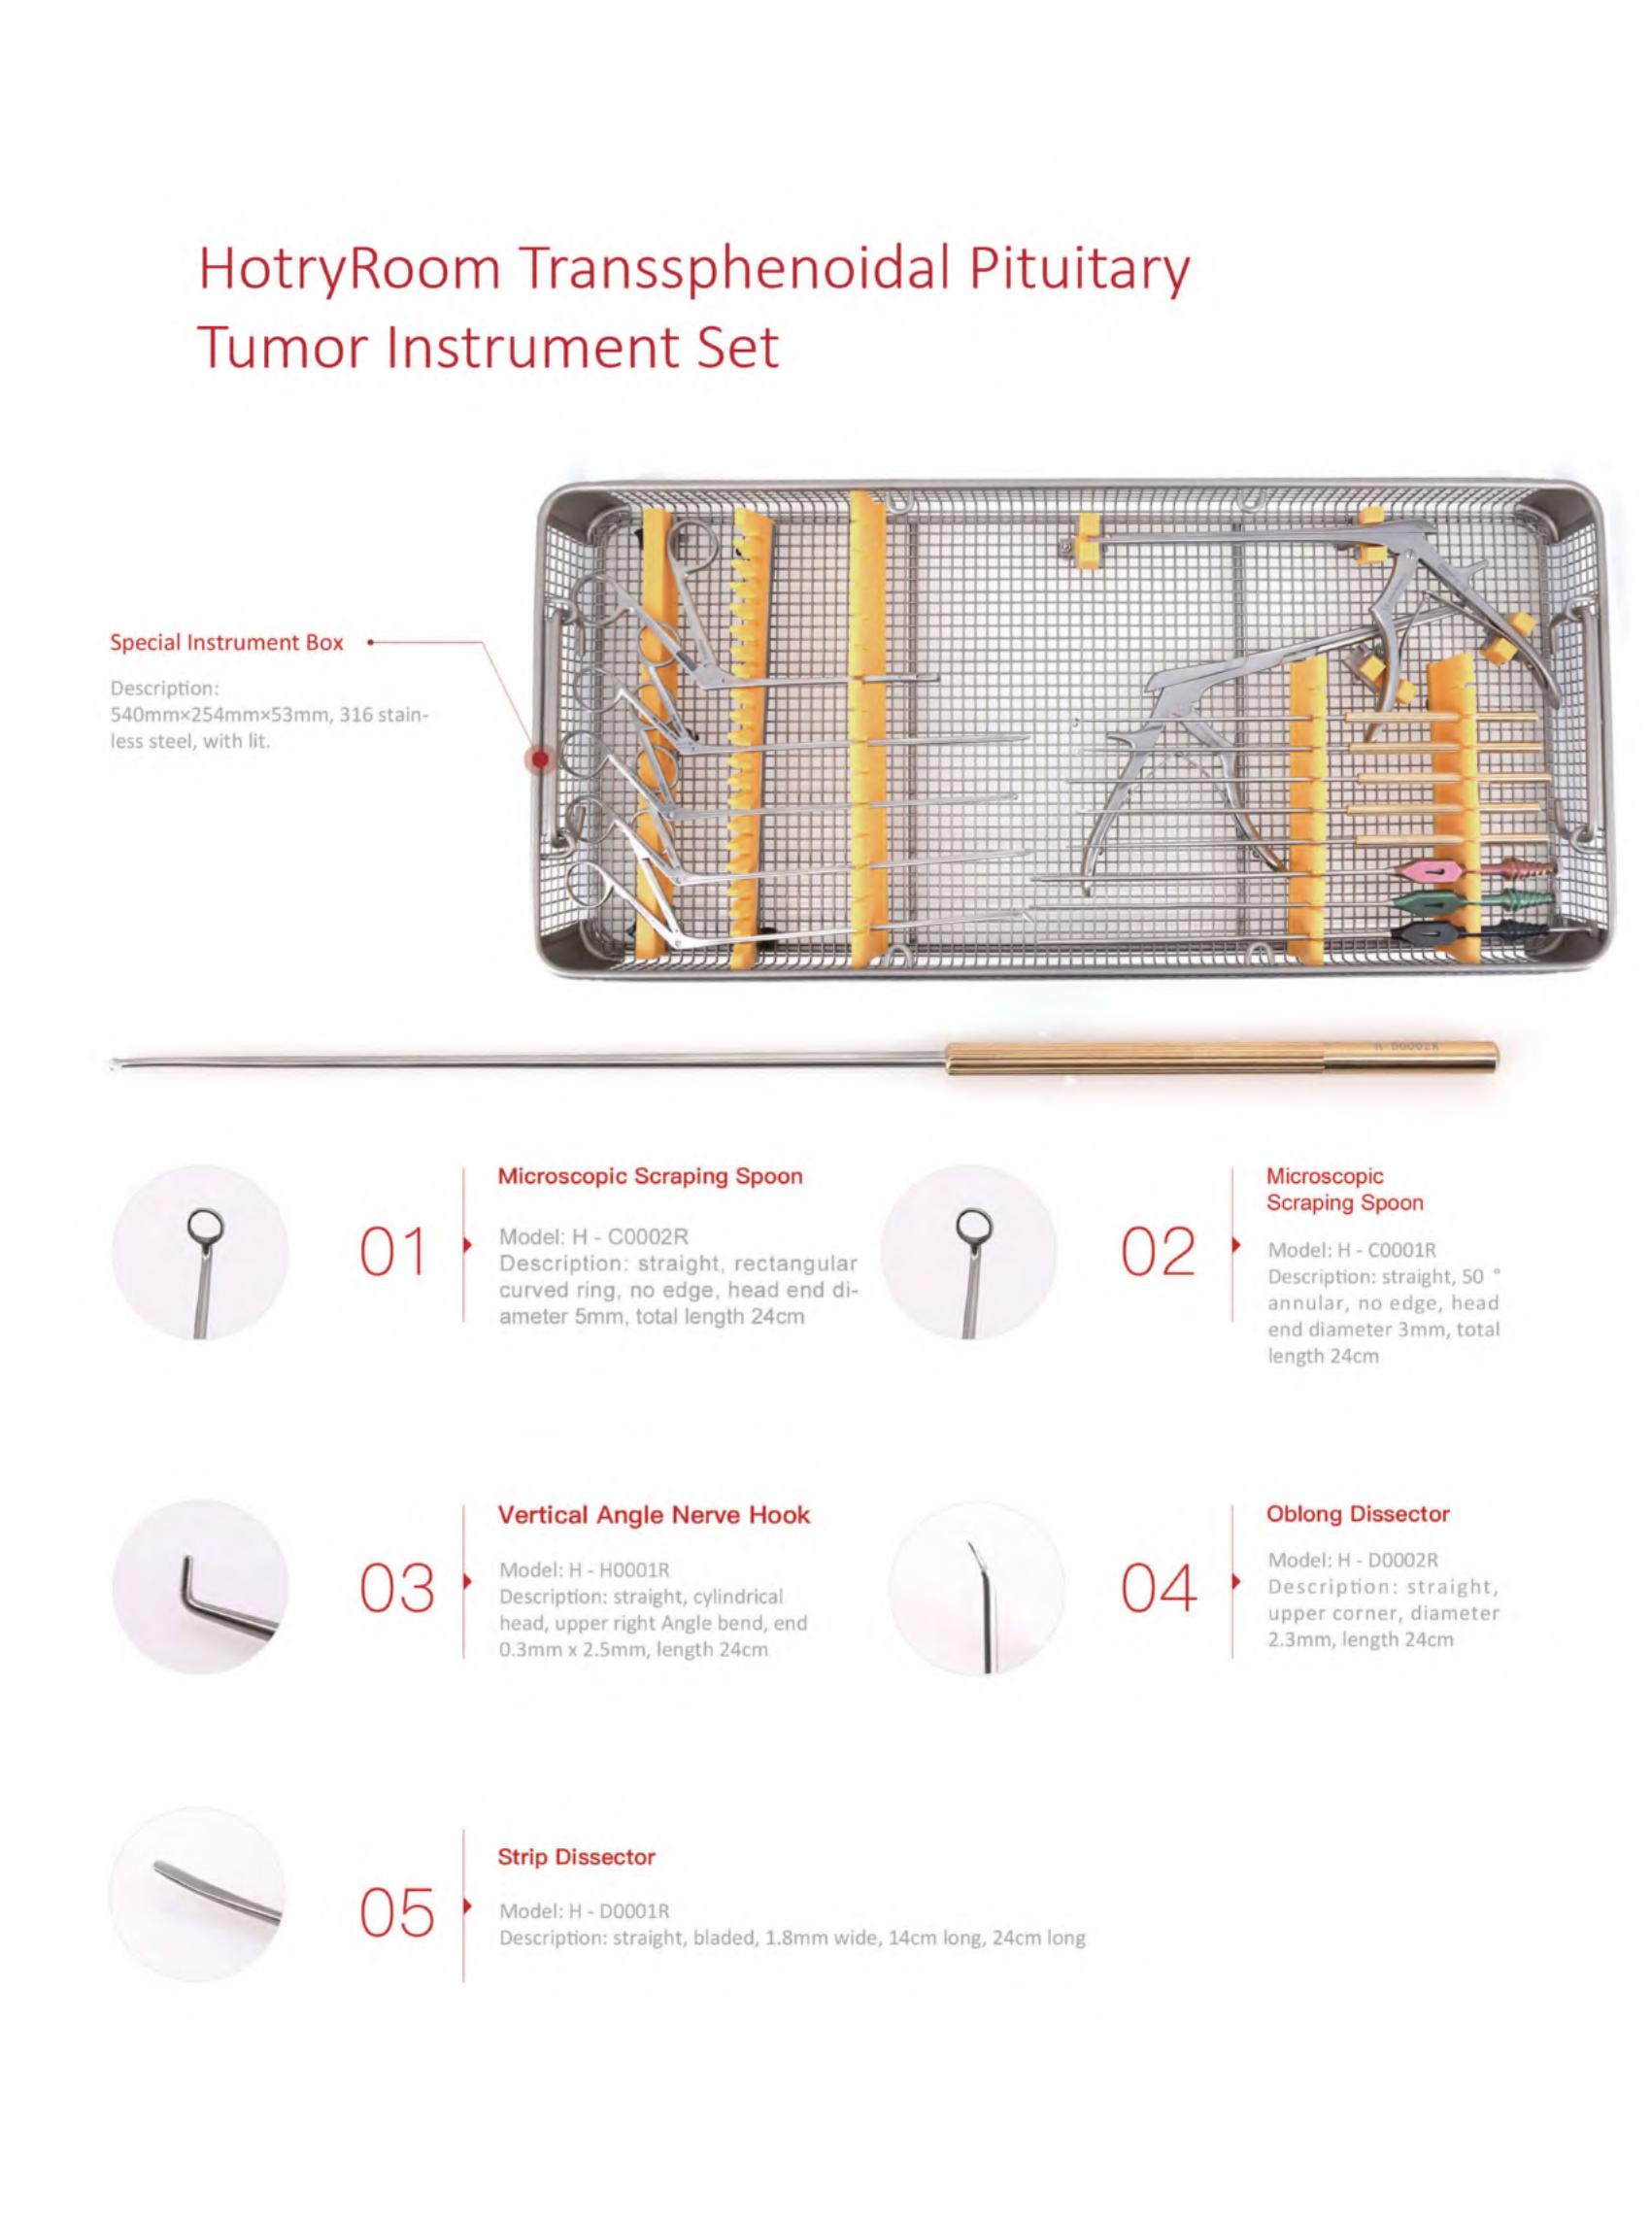 HOTRY Transsphenoidal Pituitary Tumor Instrument set